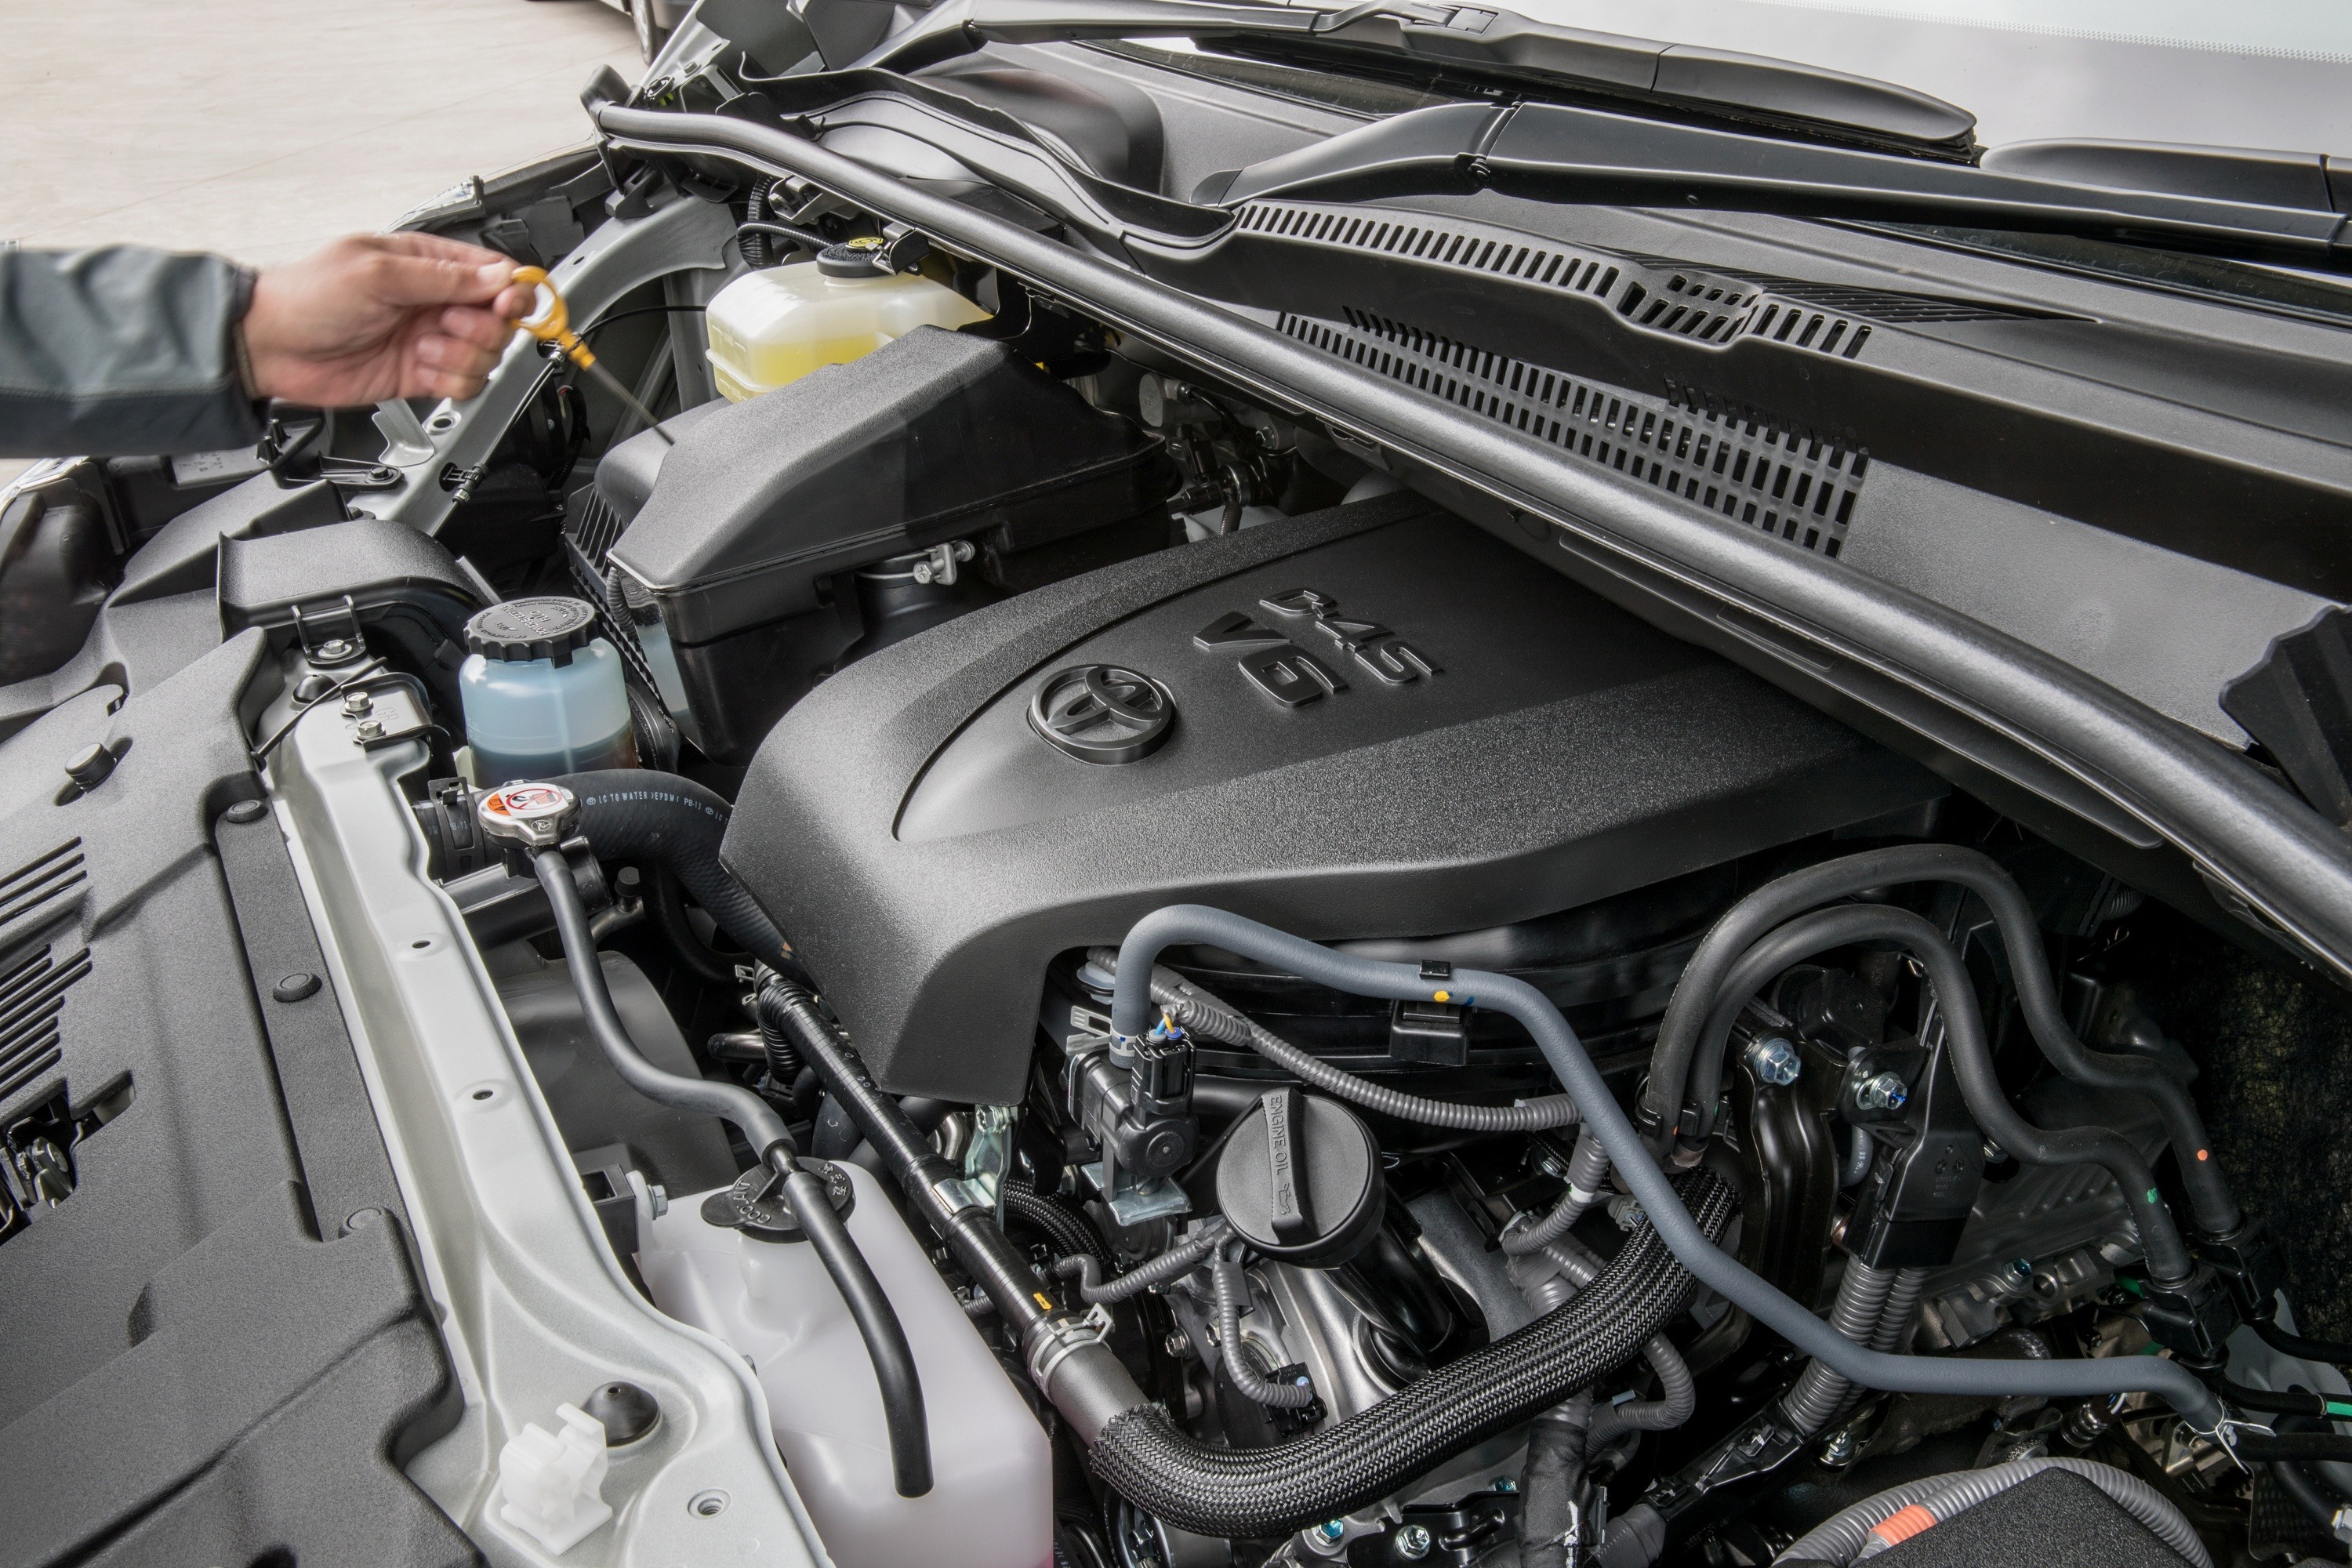 2019 Toyota HiAce LWB Van with 3.5 litre V6 Petrol Engine.